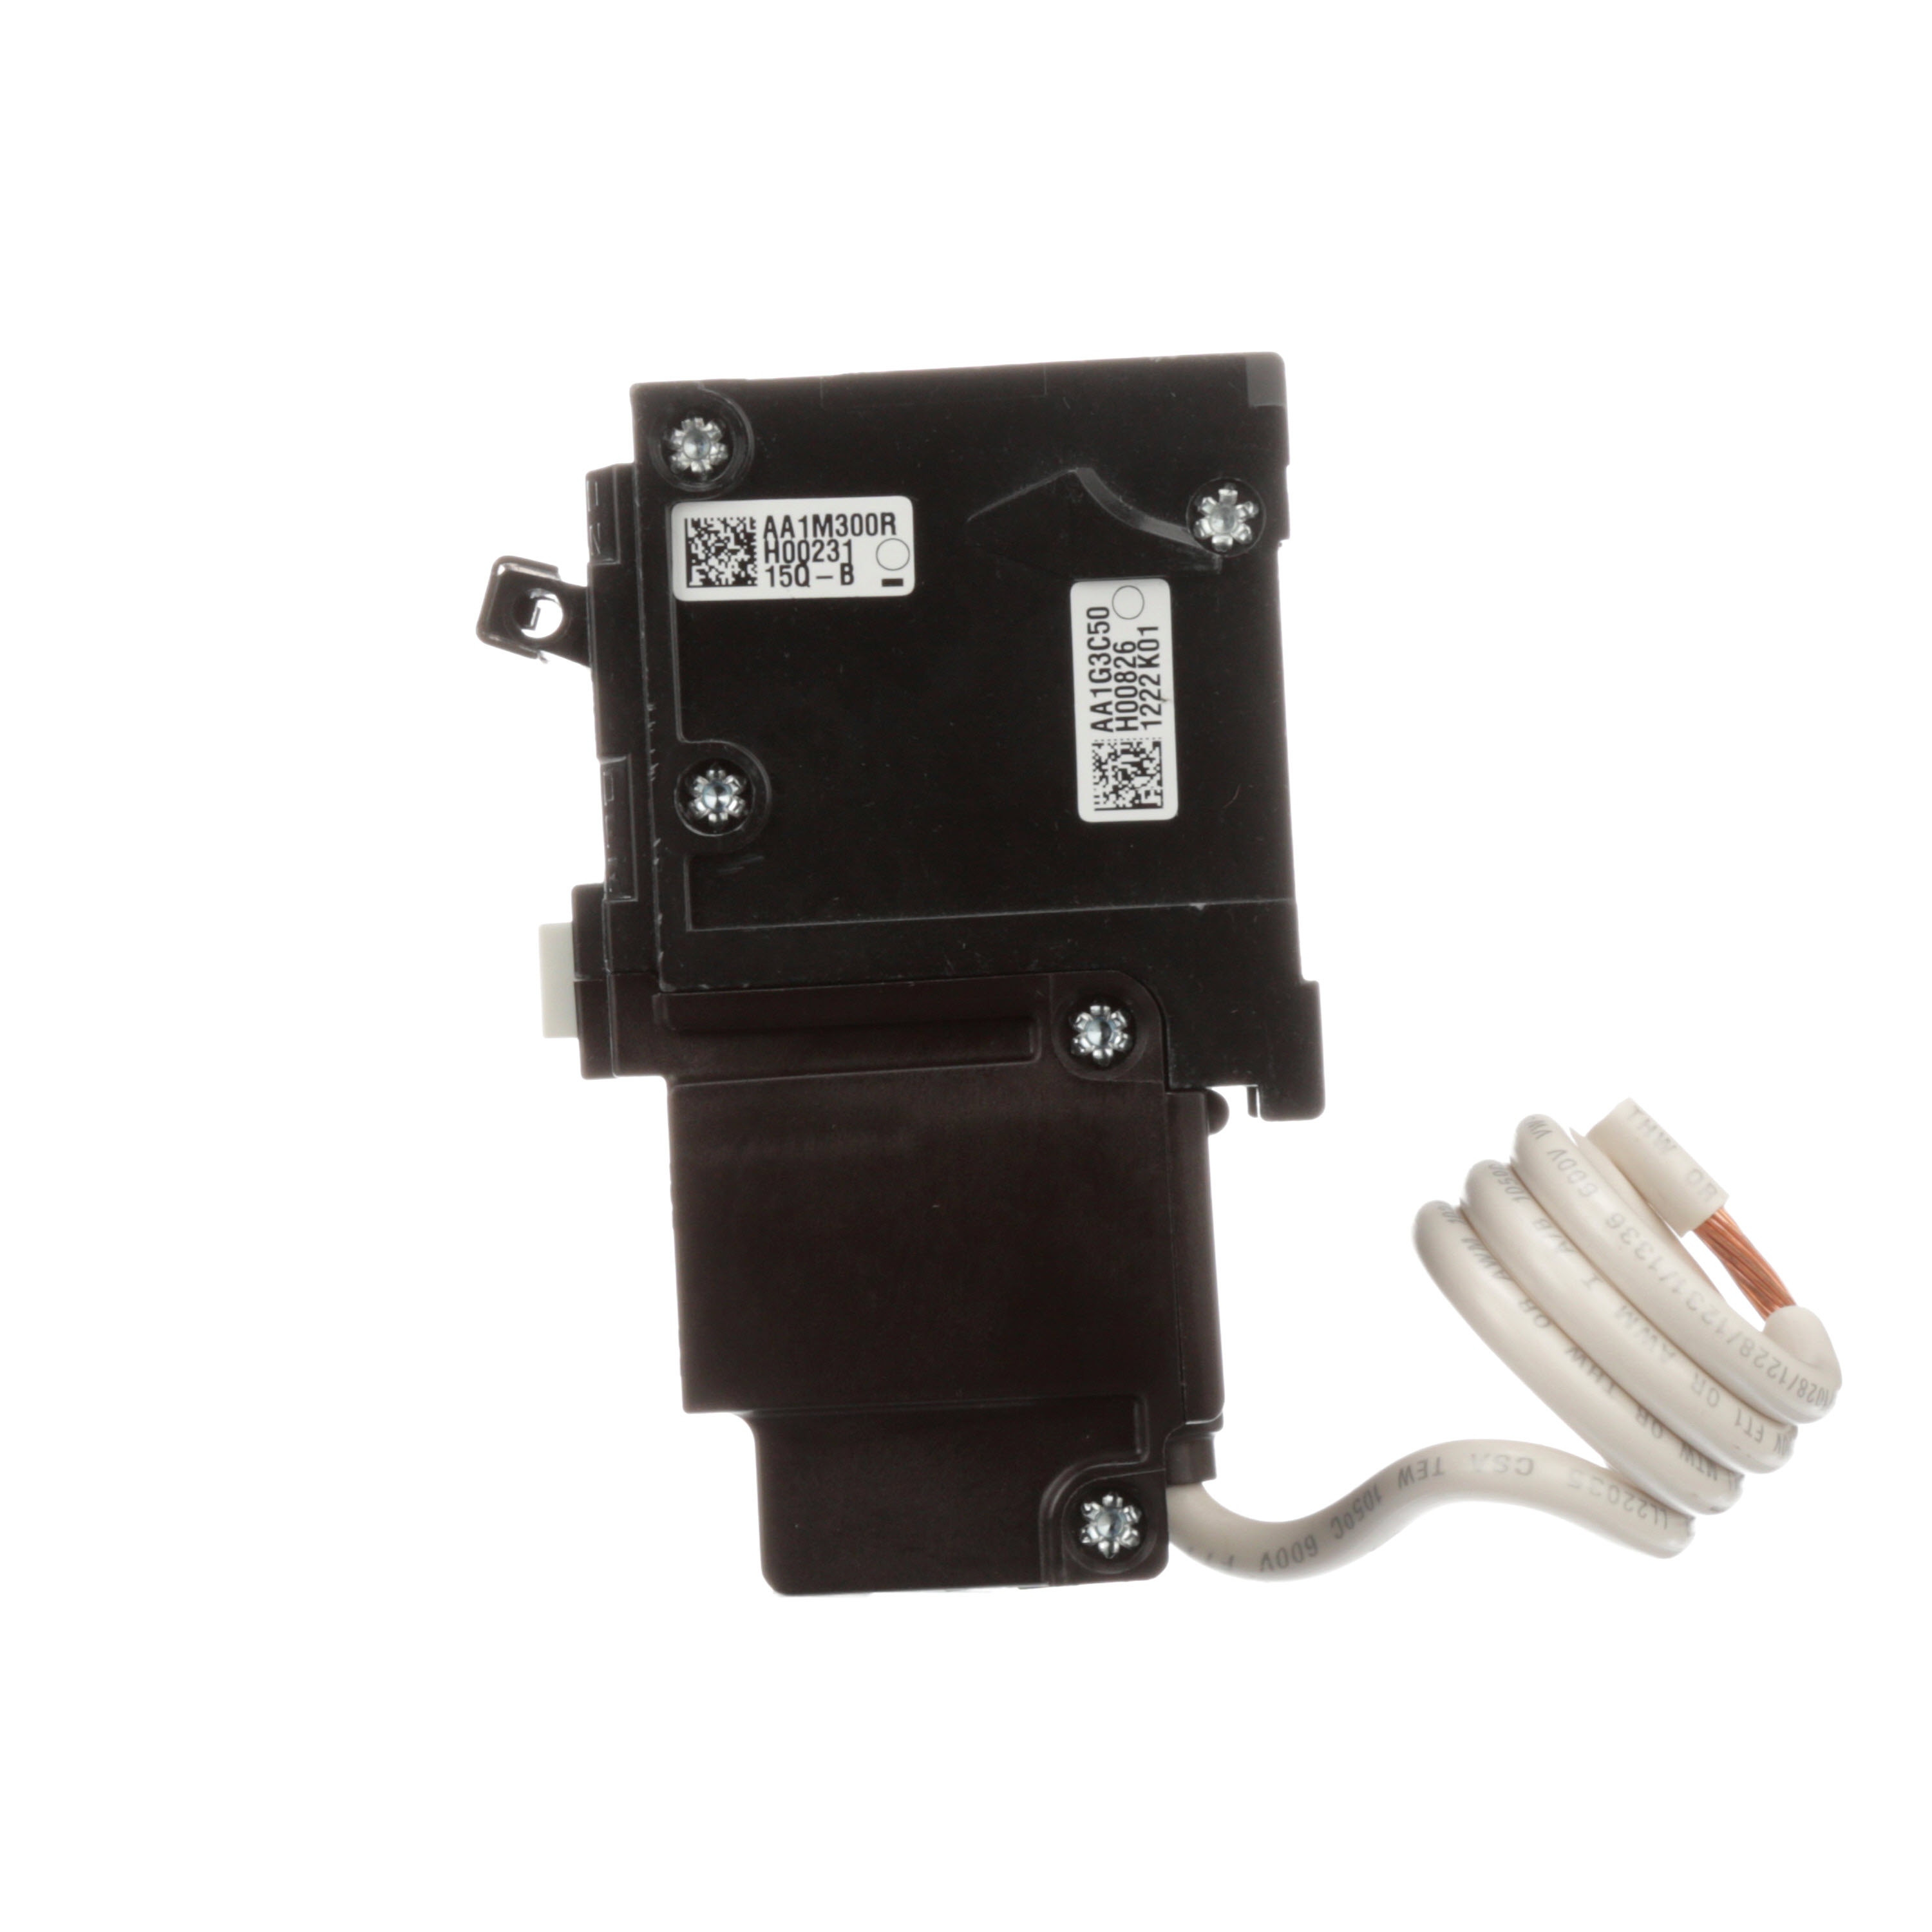 Siemens® QFG 15-Amp 1-Pole Dual Function (CAFCI/GFCI) Circuit Breaker at  Menards®